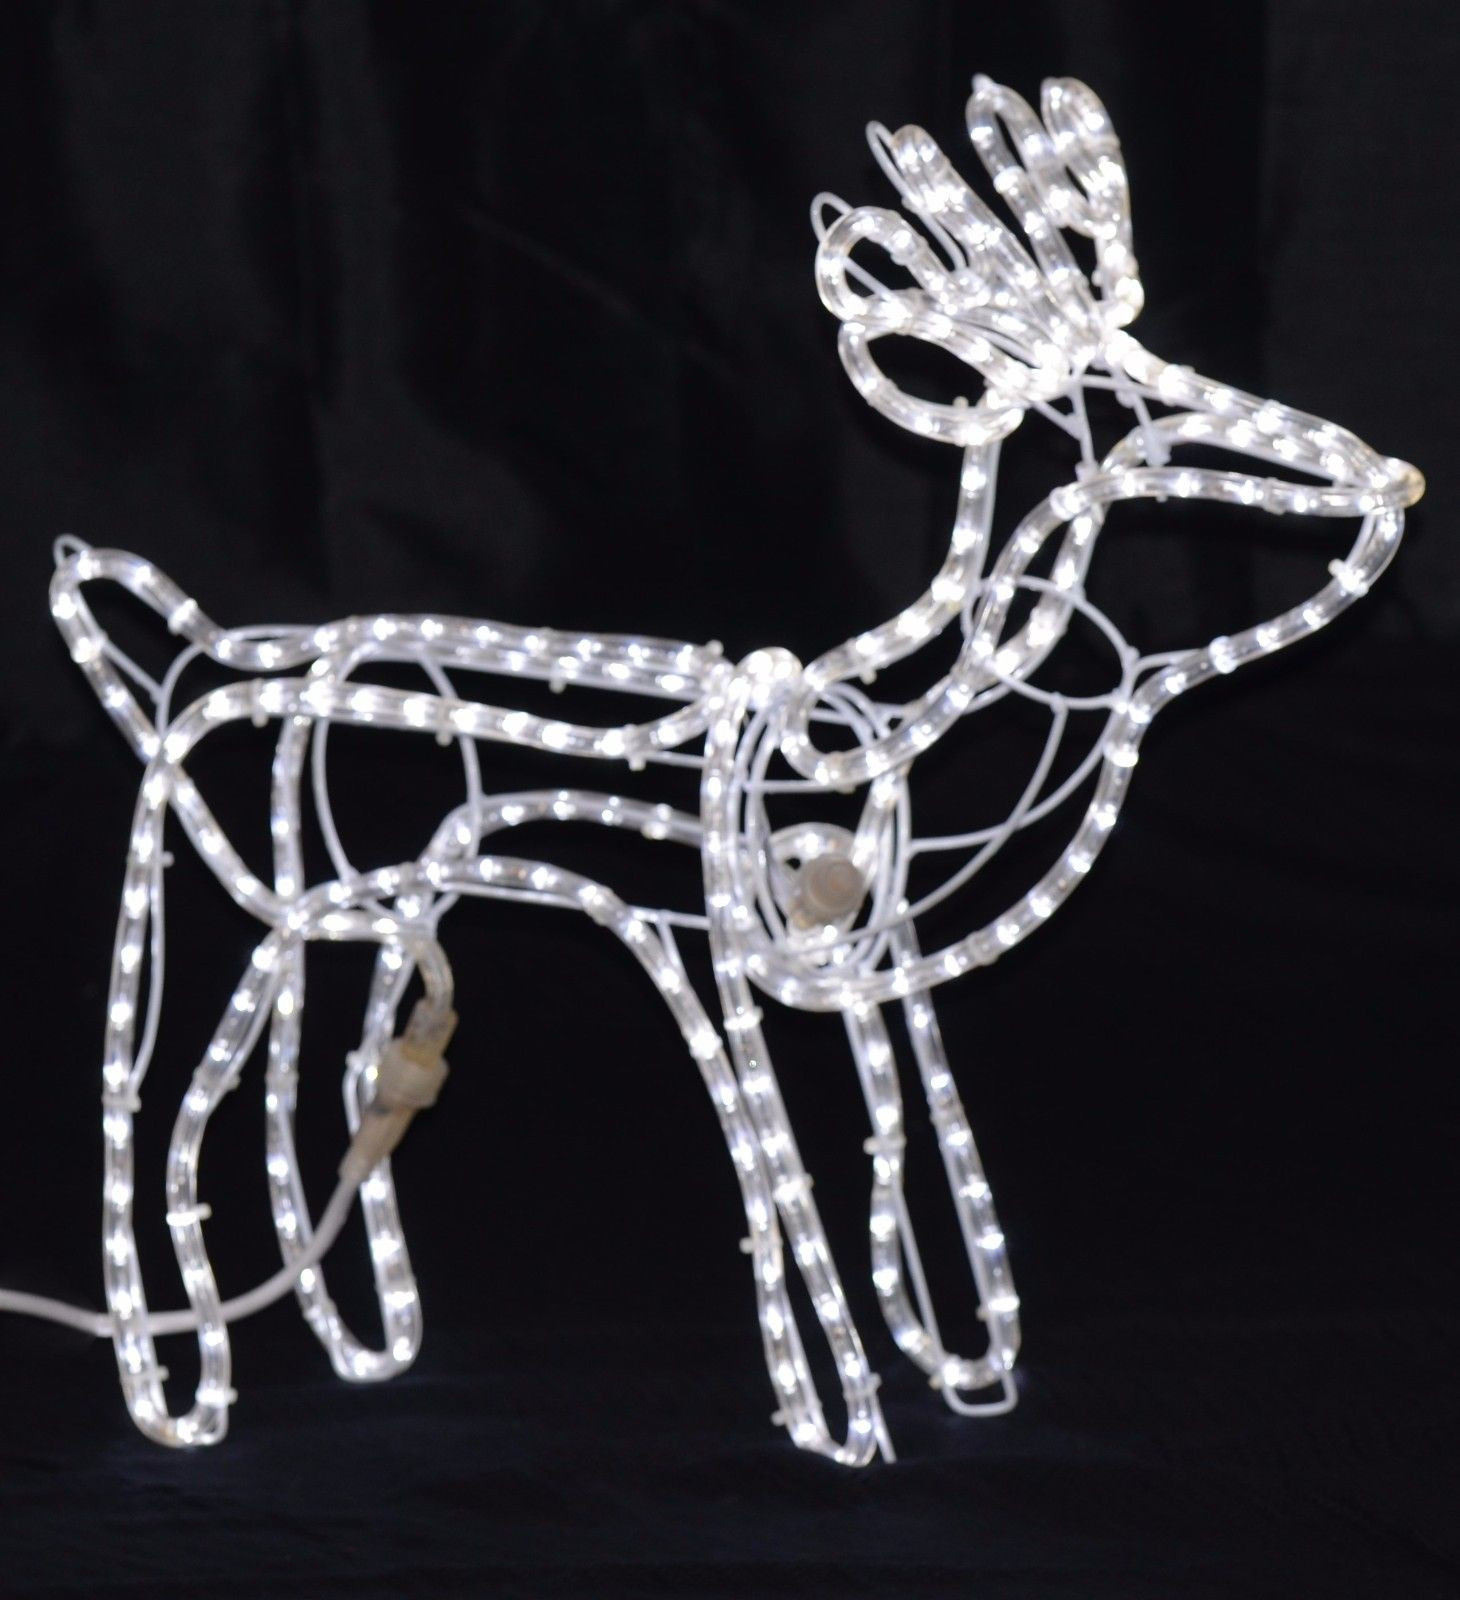 24" LED Rope Light Reindeer